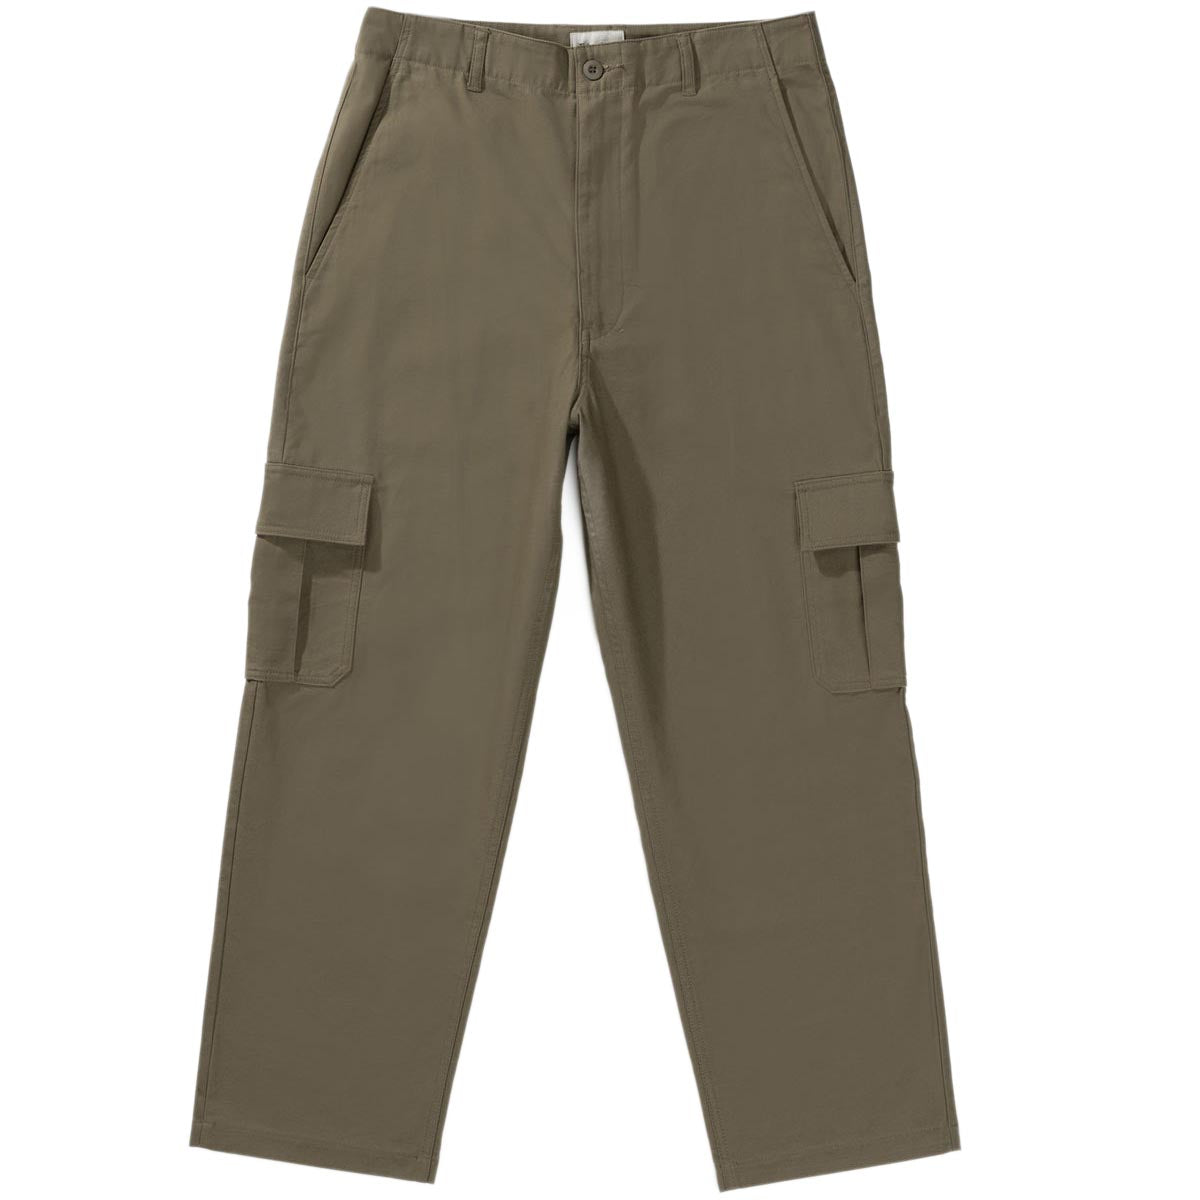 Rhythm Combat Trouser Pants - Olive image 2